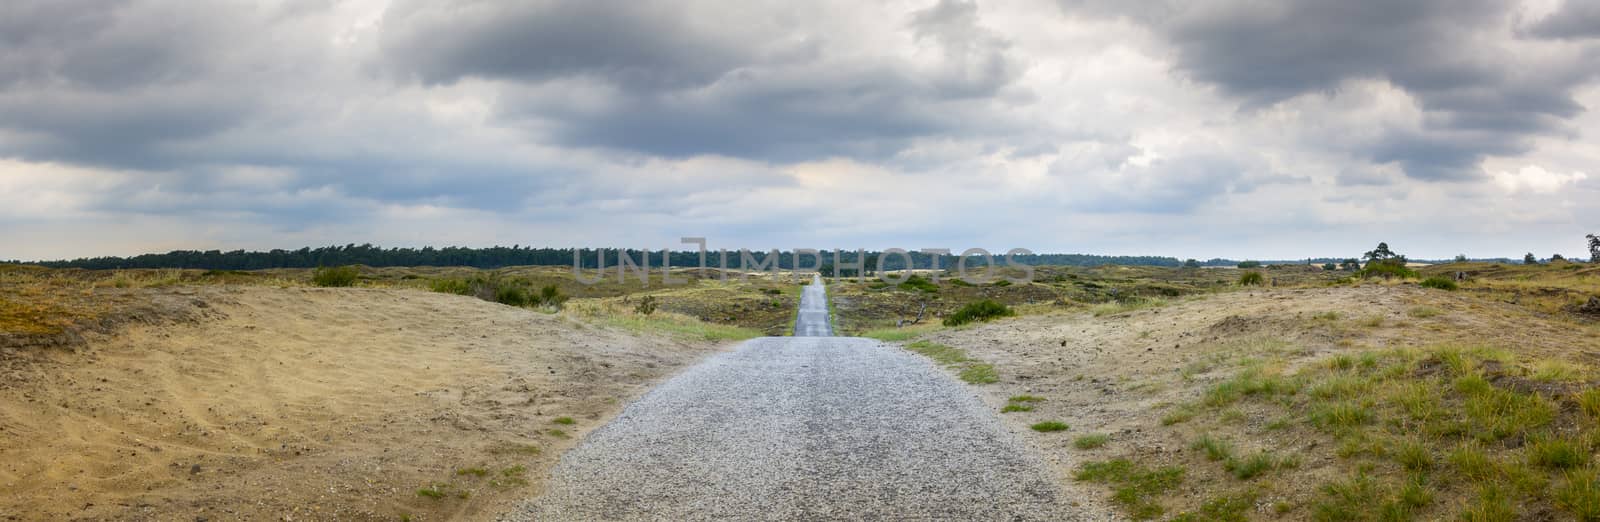 Empty bike lane surrounded by nature in Hoge Veluwe national Park, close to Arnhem, Netherlands by kb79